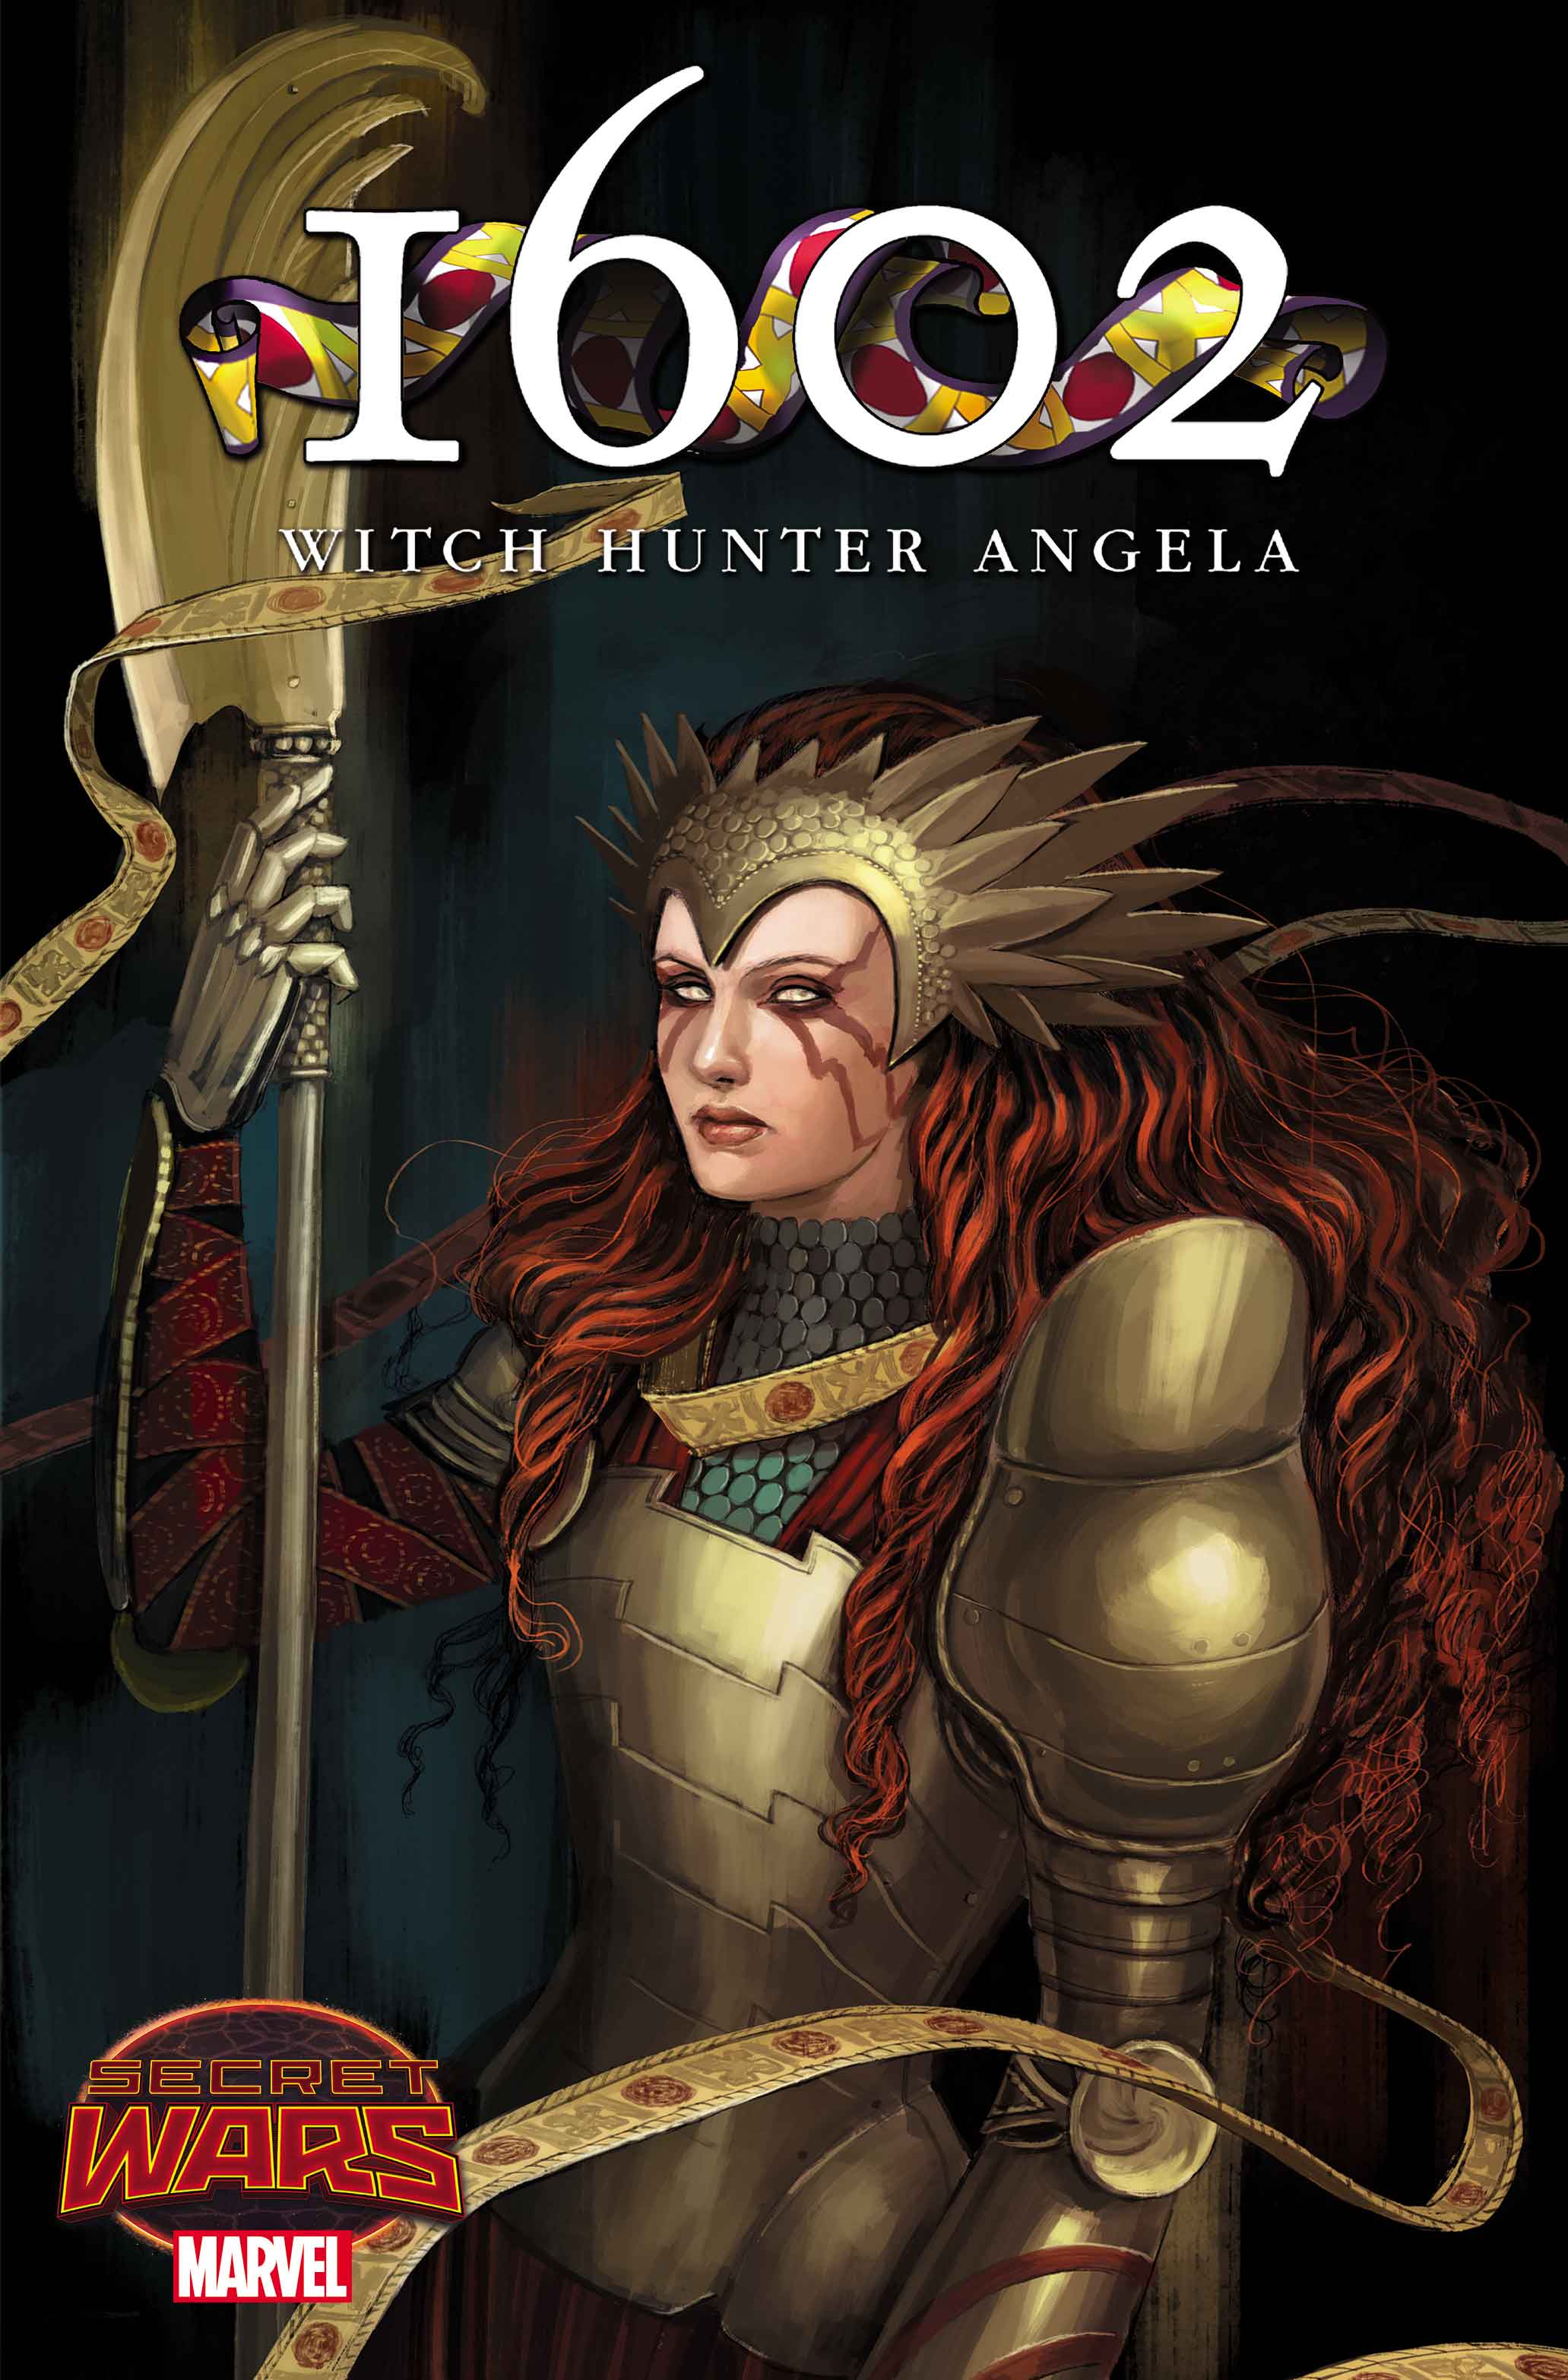 1602 Witch Hunter Angela (2015) #1